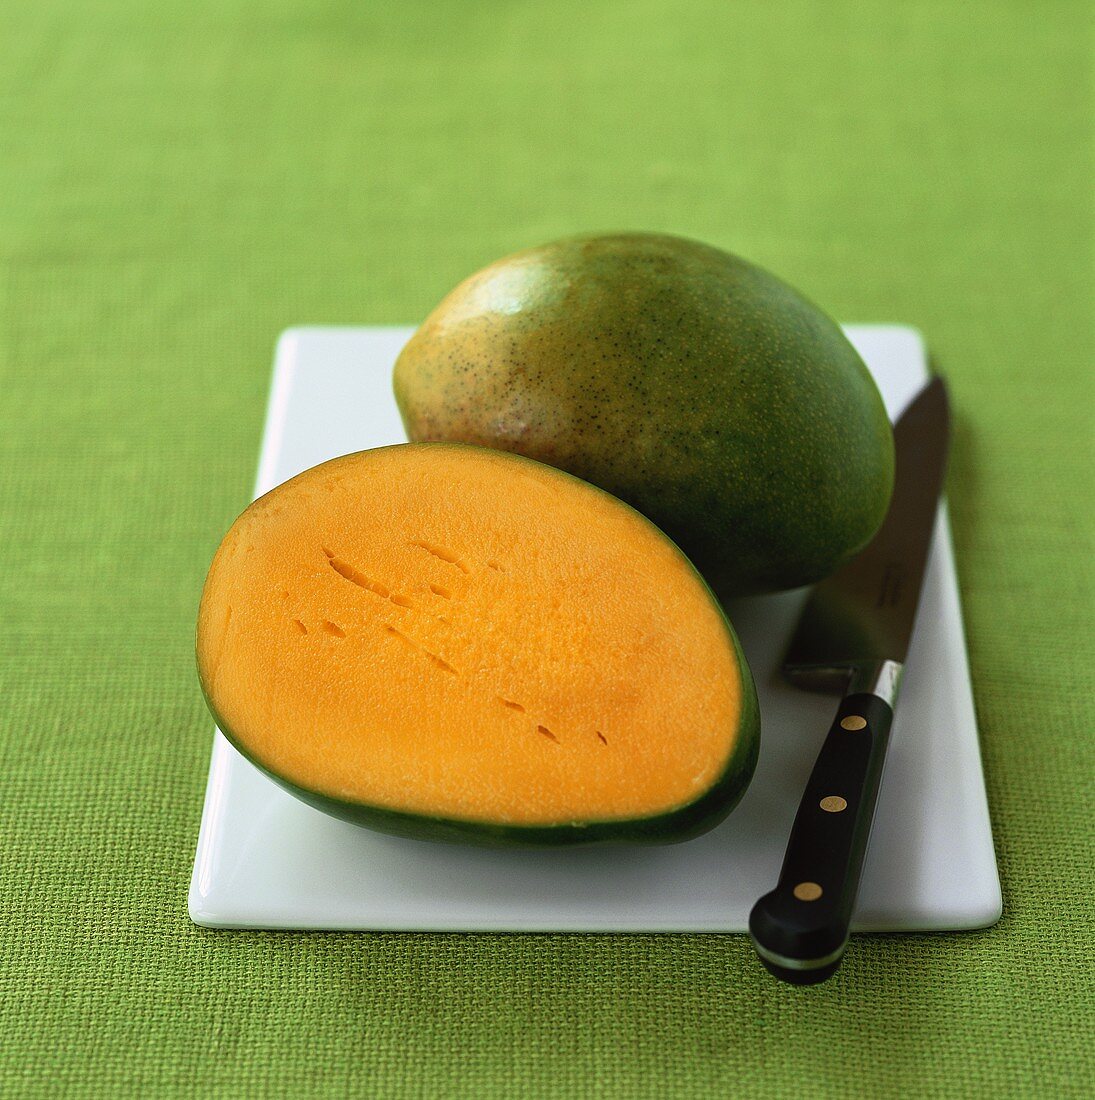 Mango, whole and half